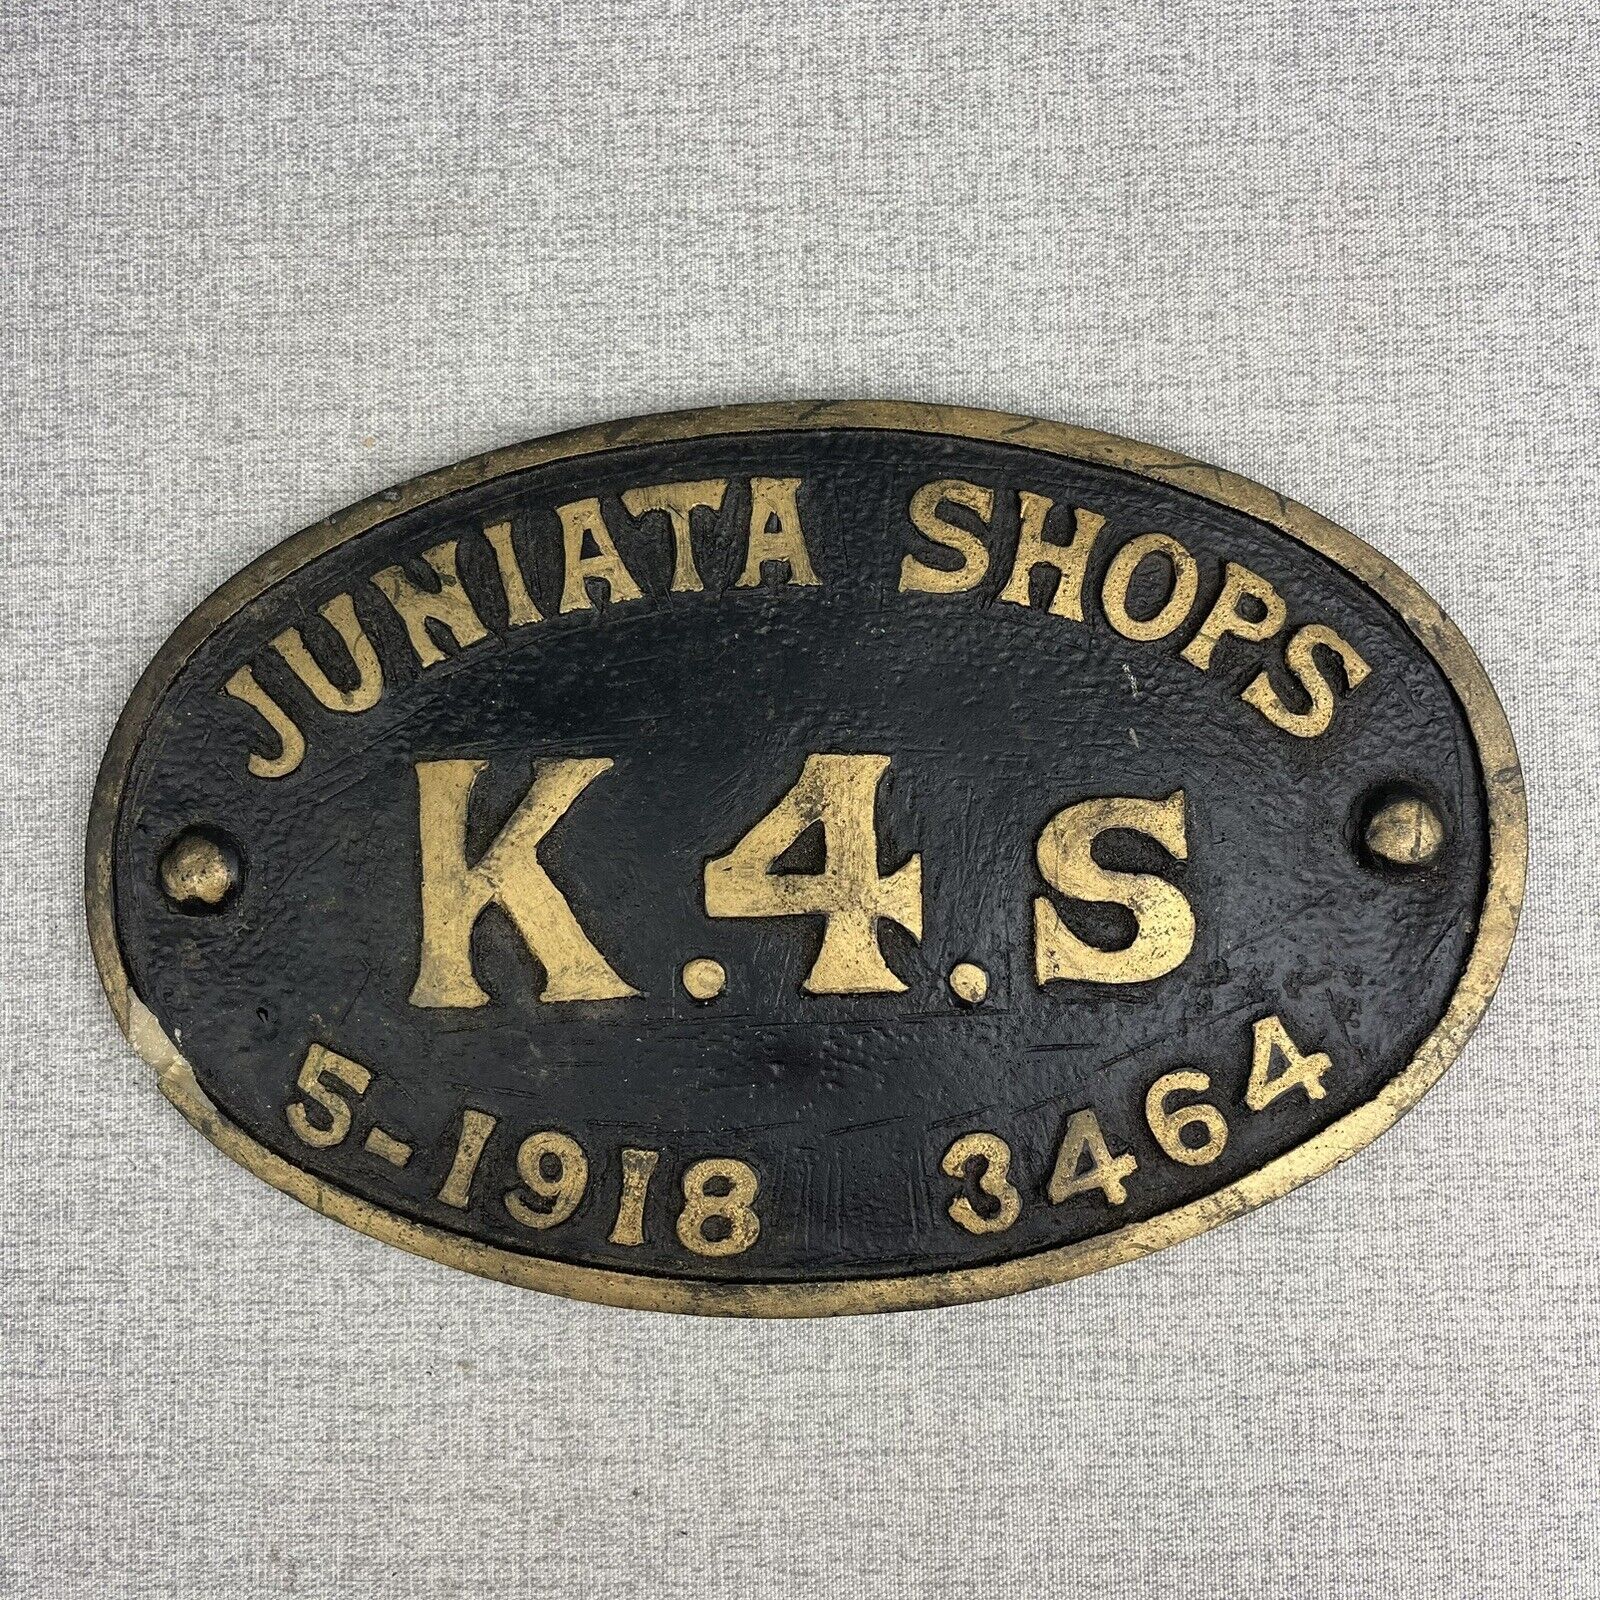 K4s Juniata Shops Altoona PA Builders Plate Replica Resin by Walter E. Lee Inc